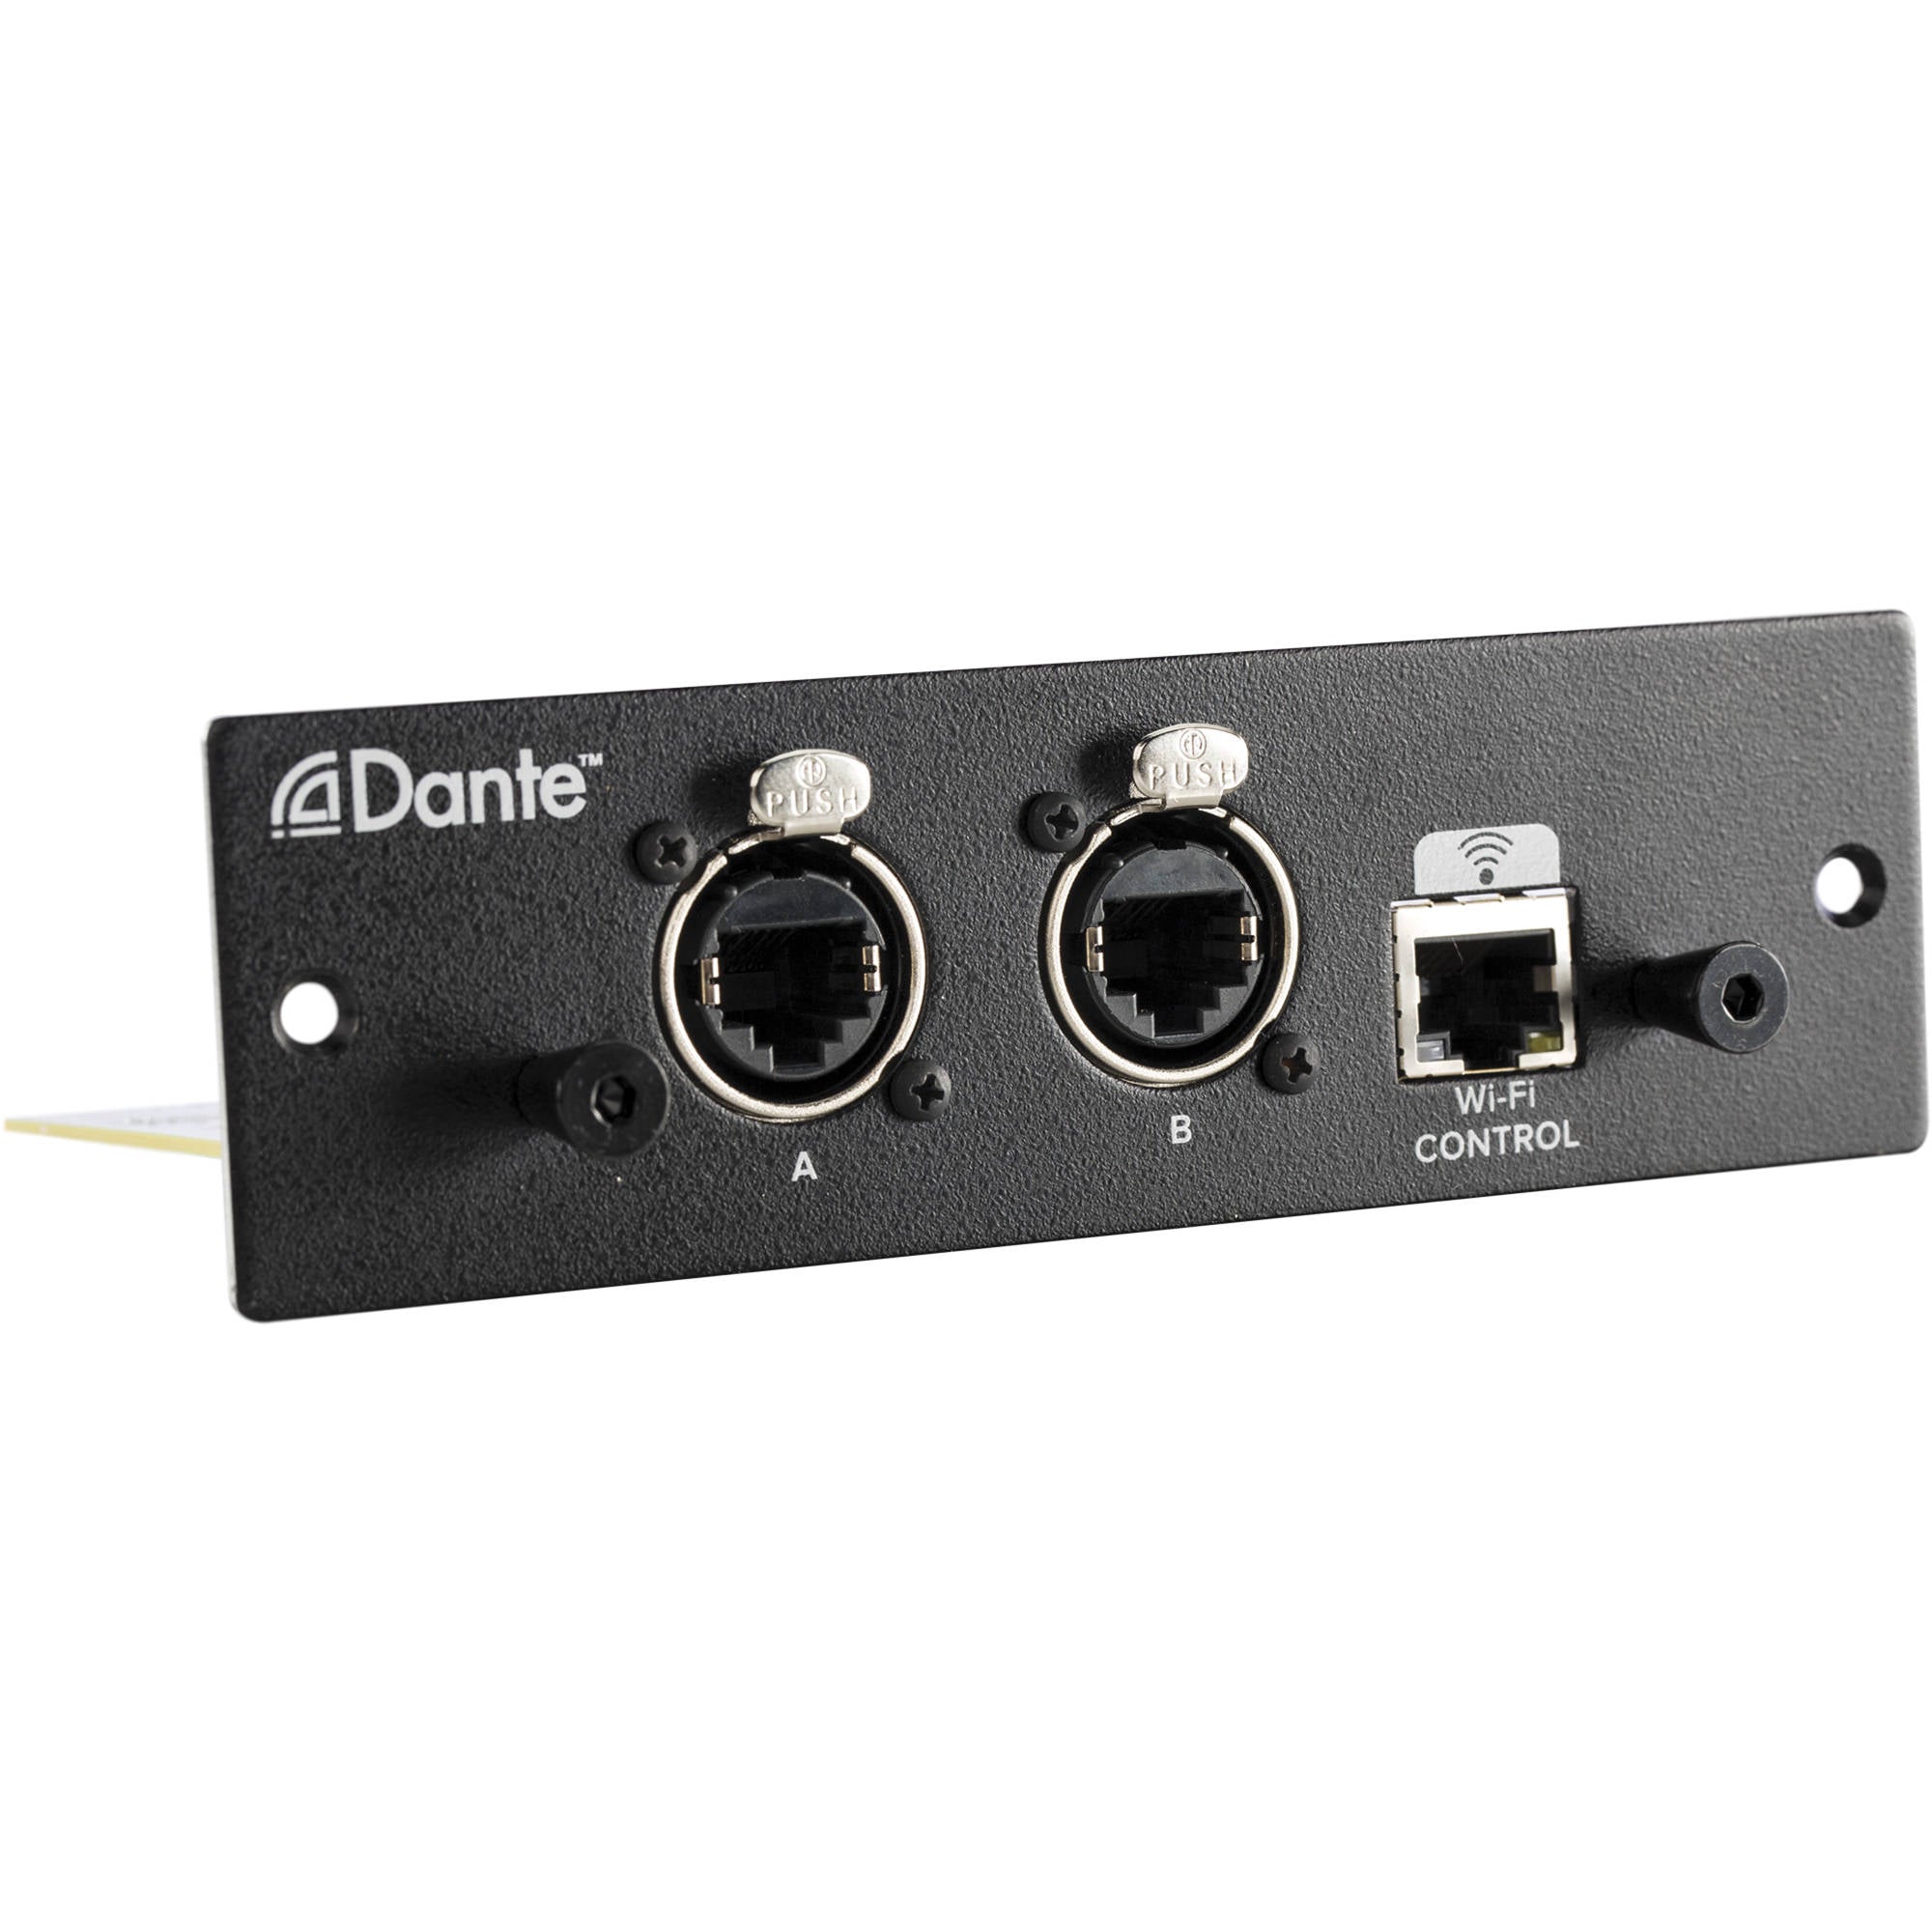 Mackie DL Dante Expansion Card for DL32R Digital Mixer